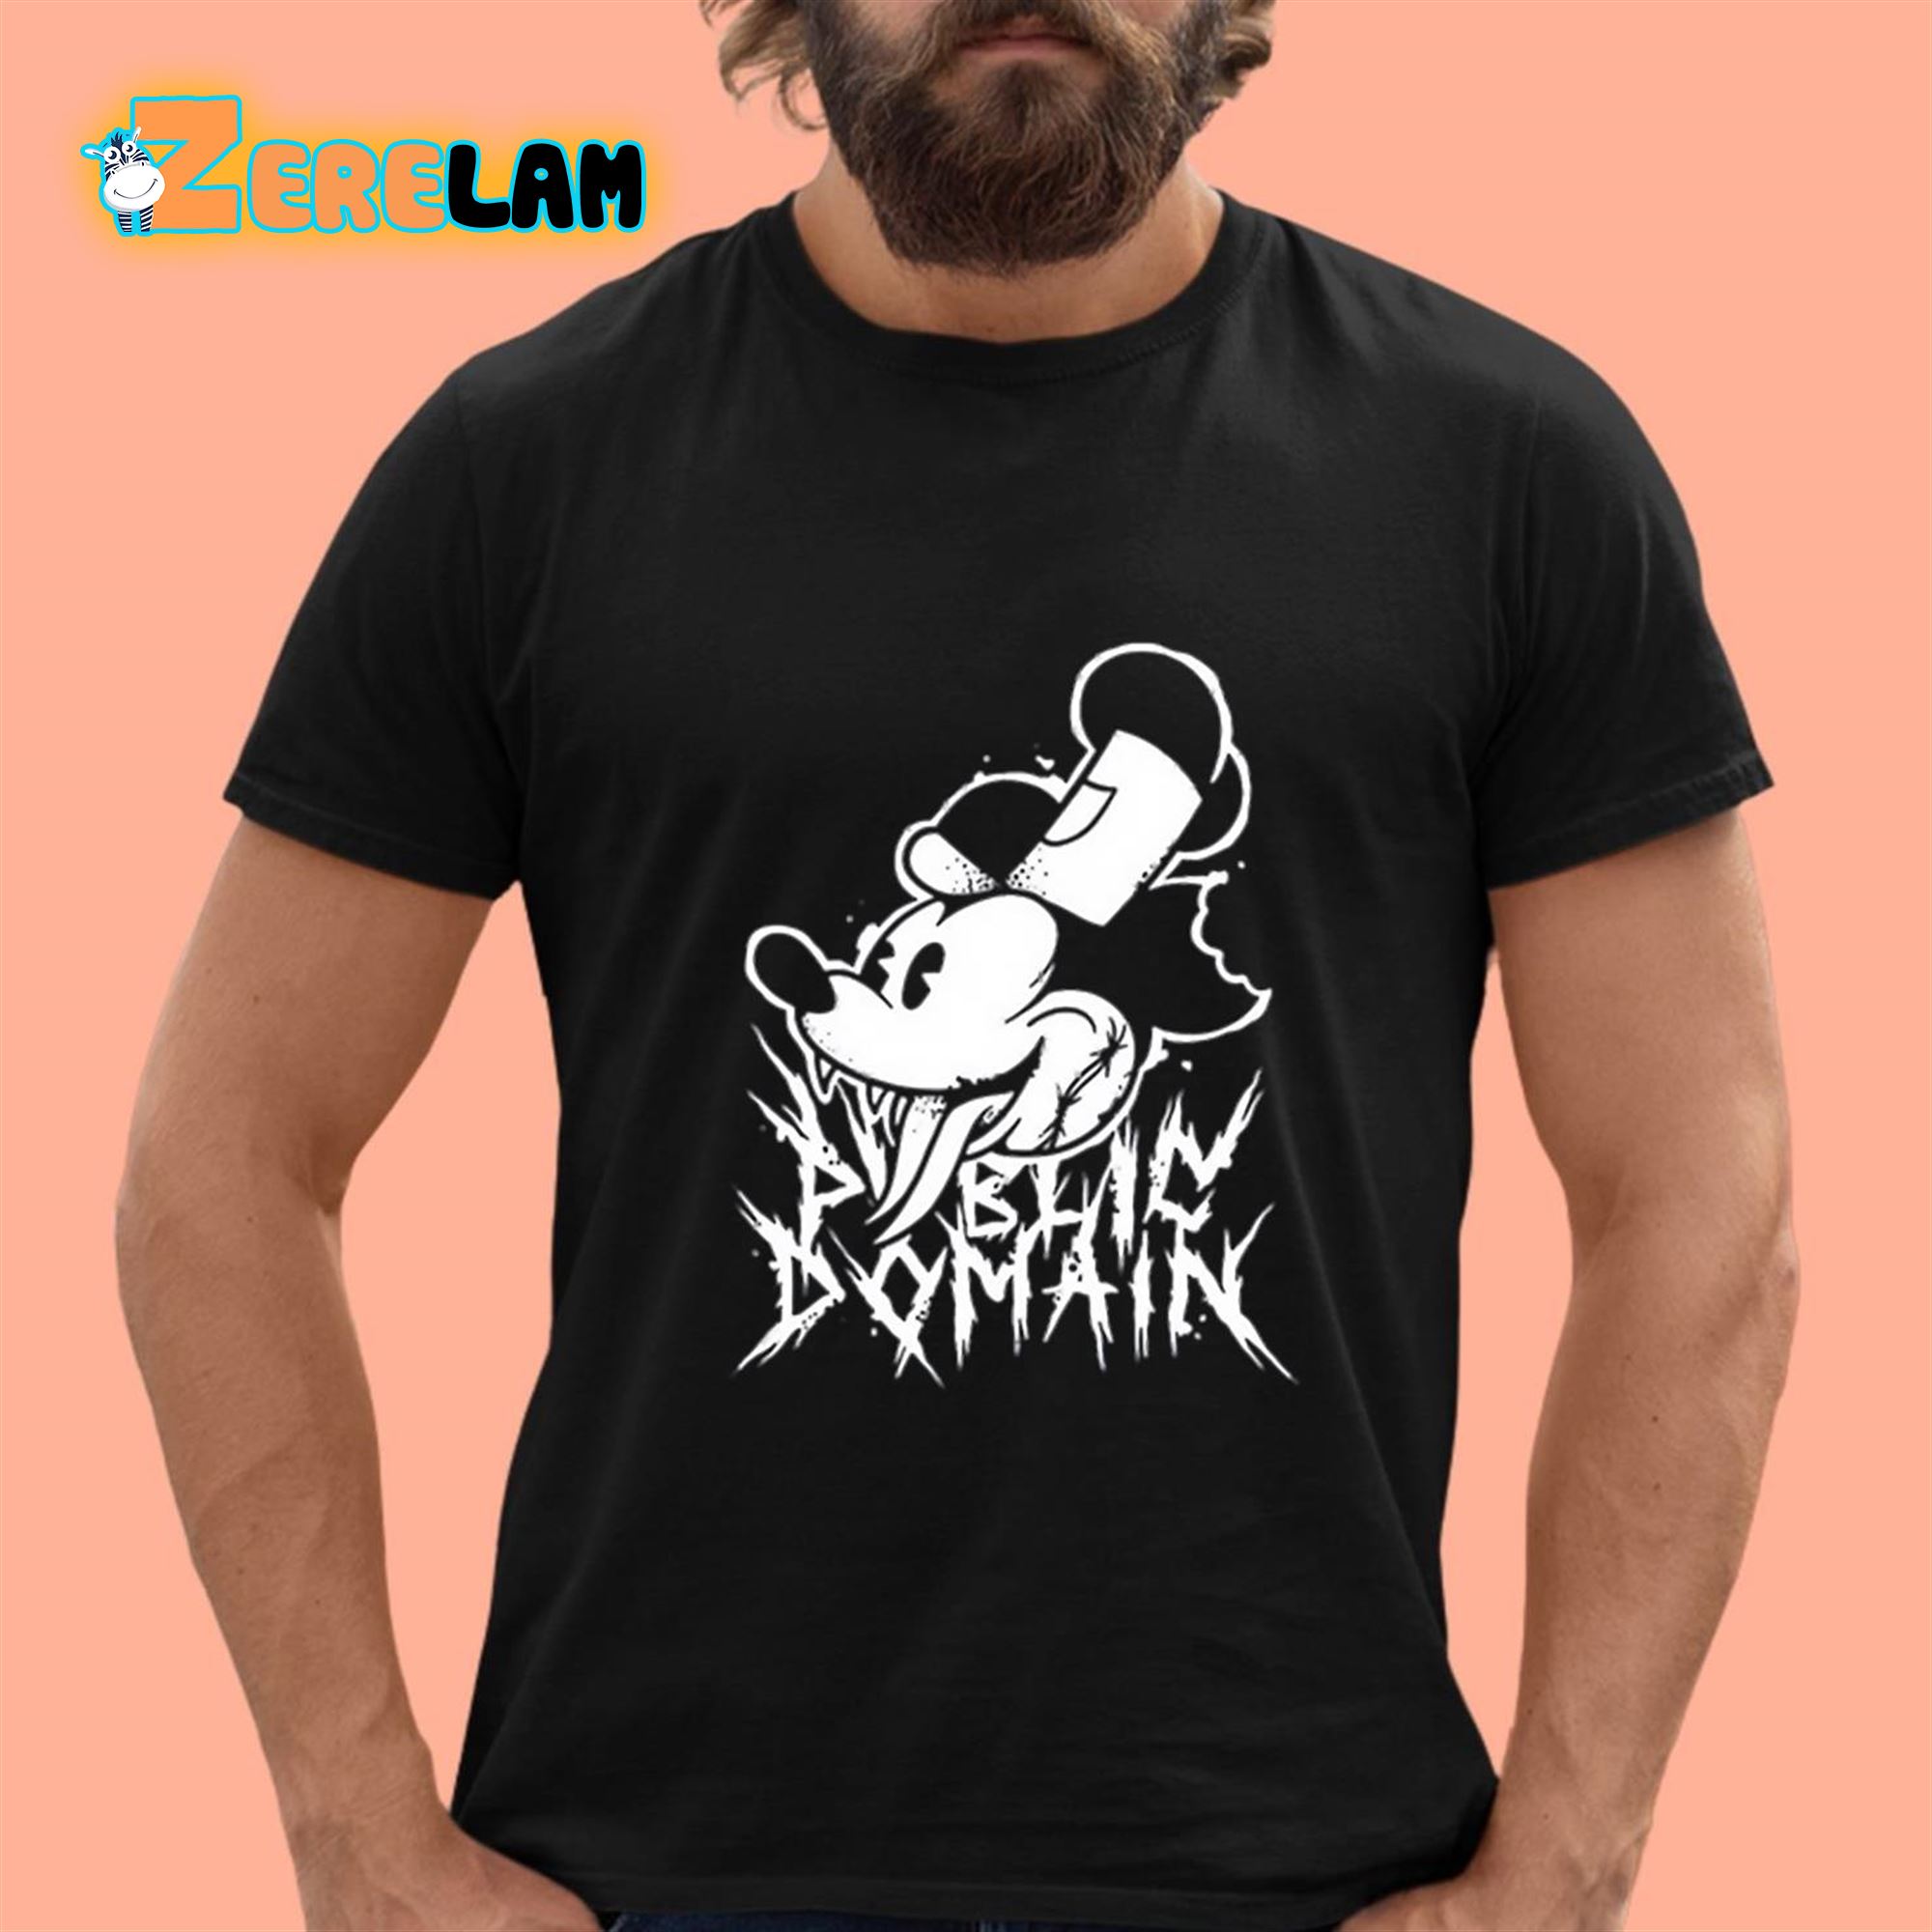 Mickey Mouse Walt Disney World Medium LS Gray Vintage Sweatshirt USA